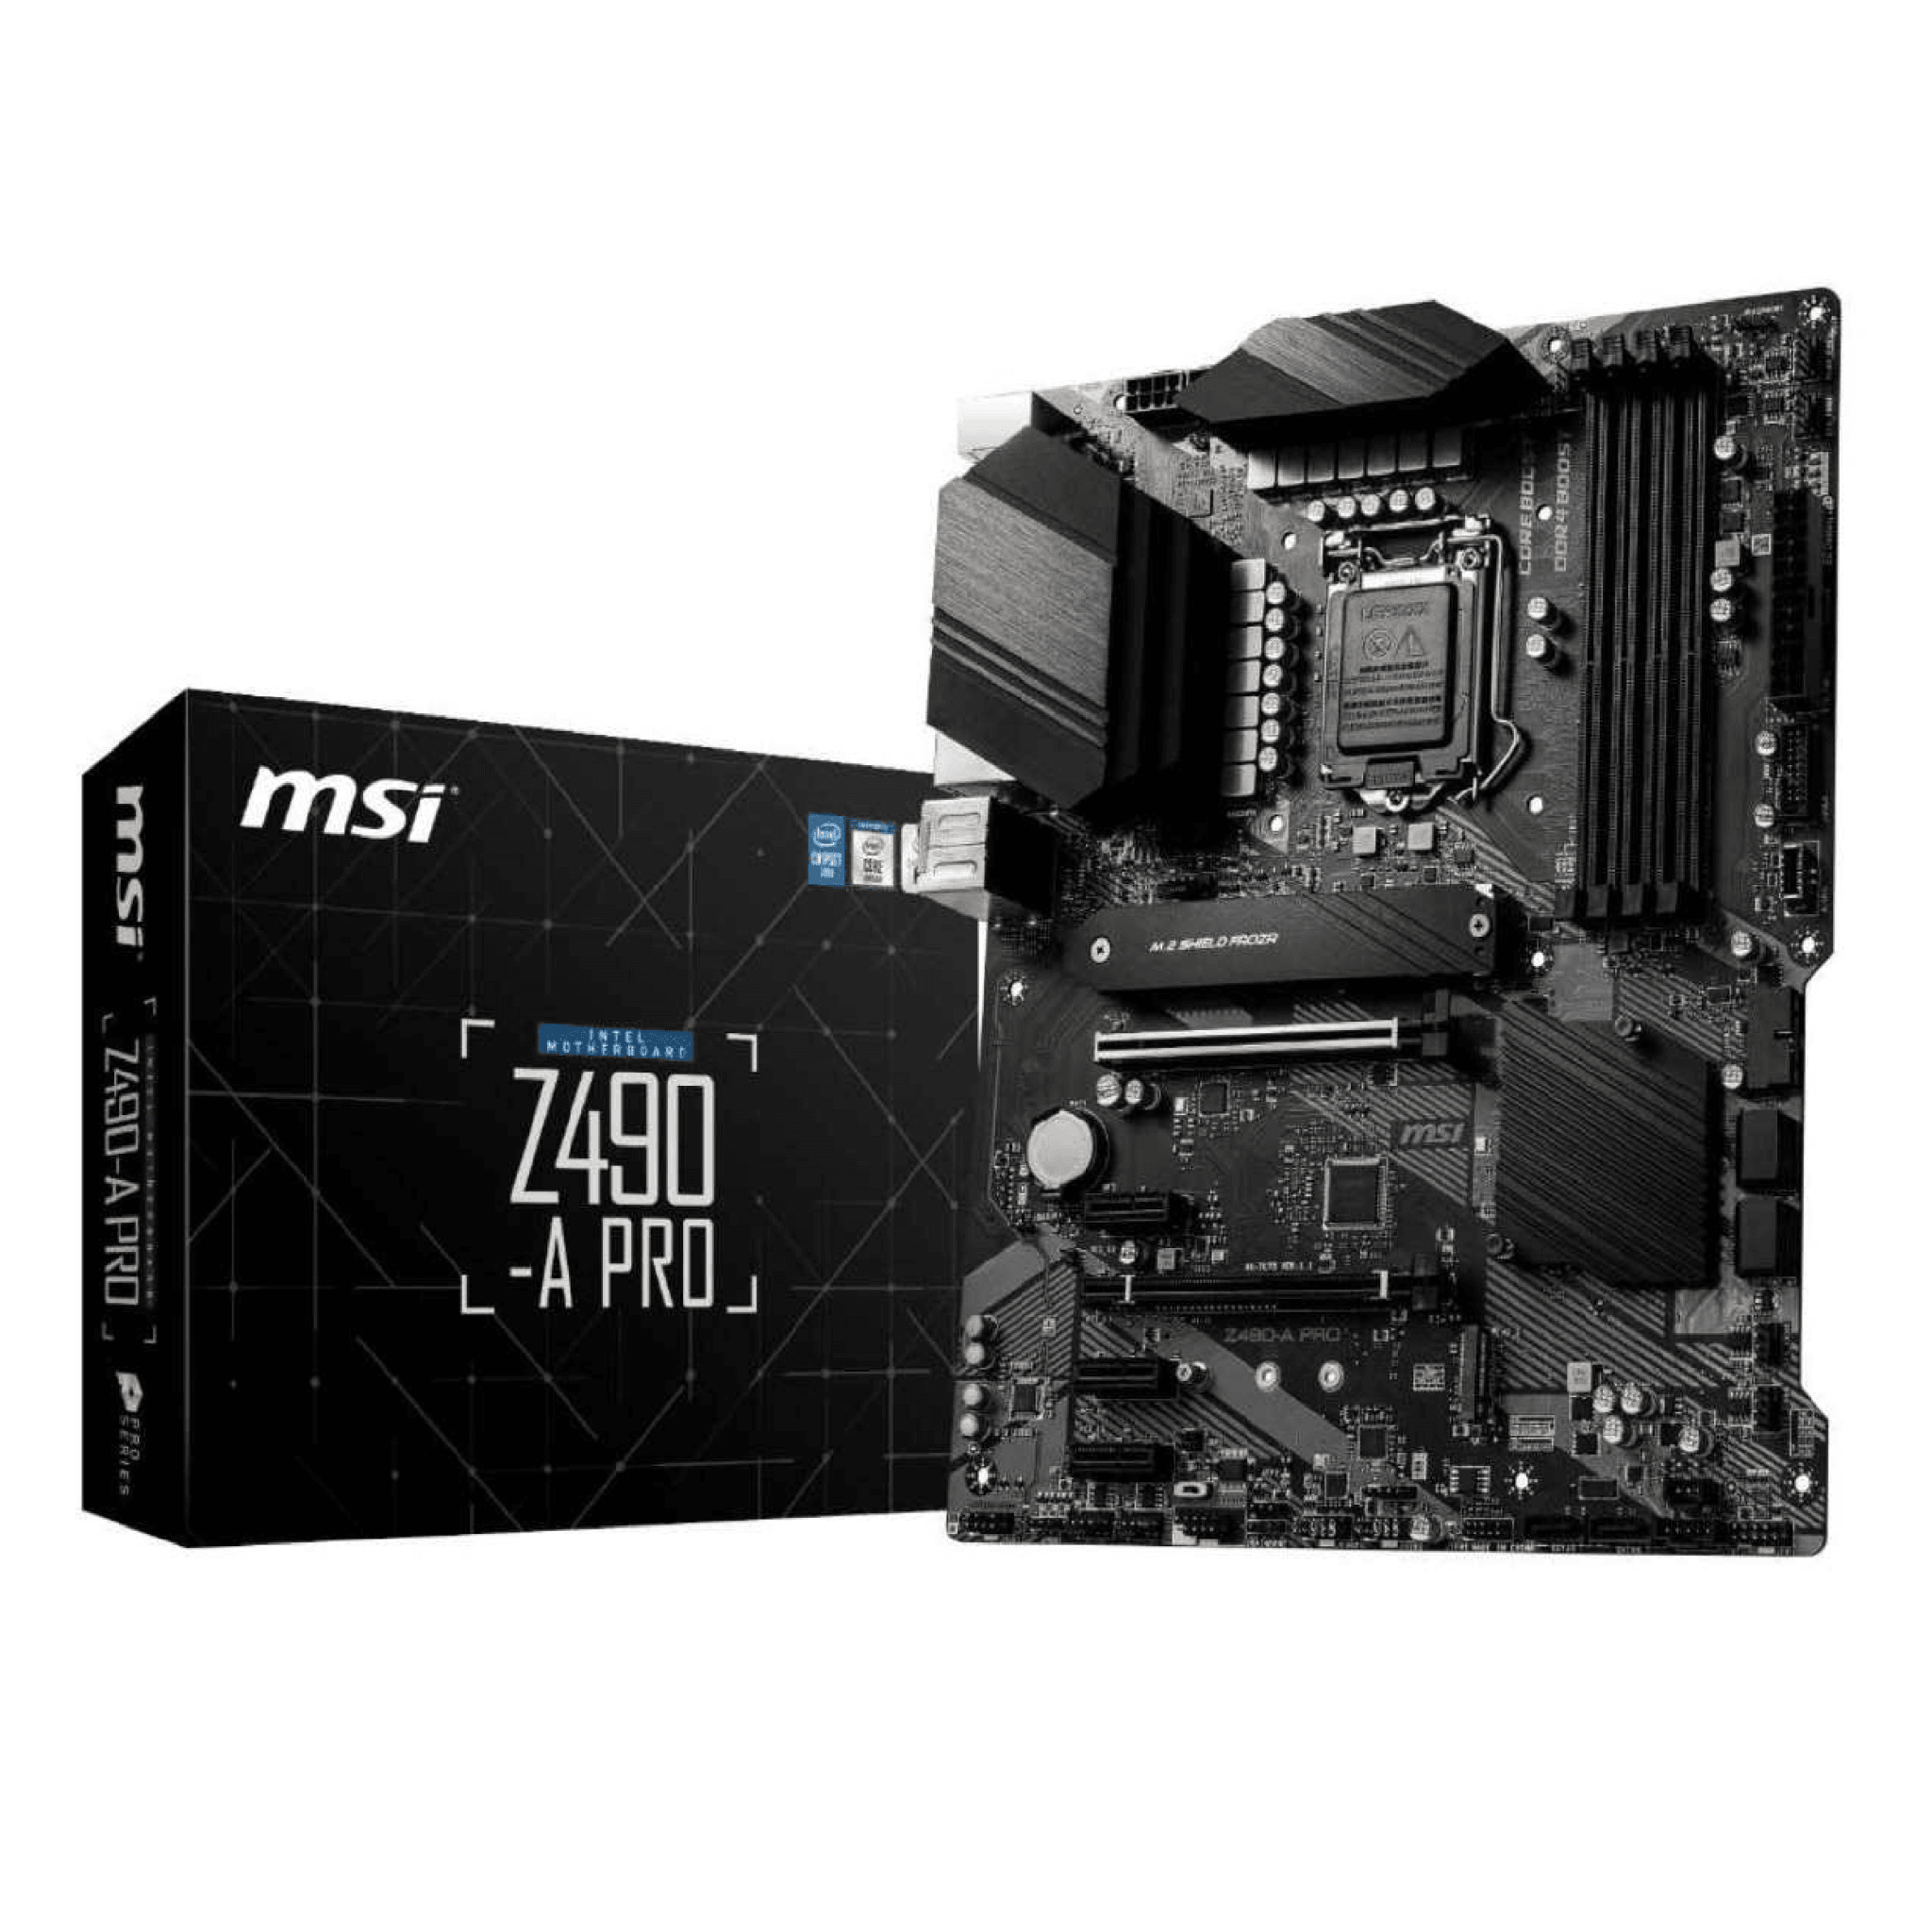 MSI Z490-A Pro Intel Motherboard - Store 974 | ستور ٩٧٤